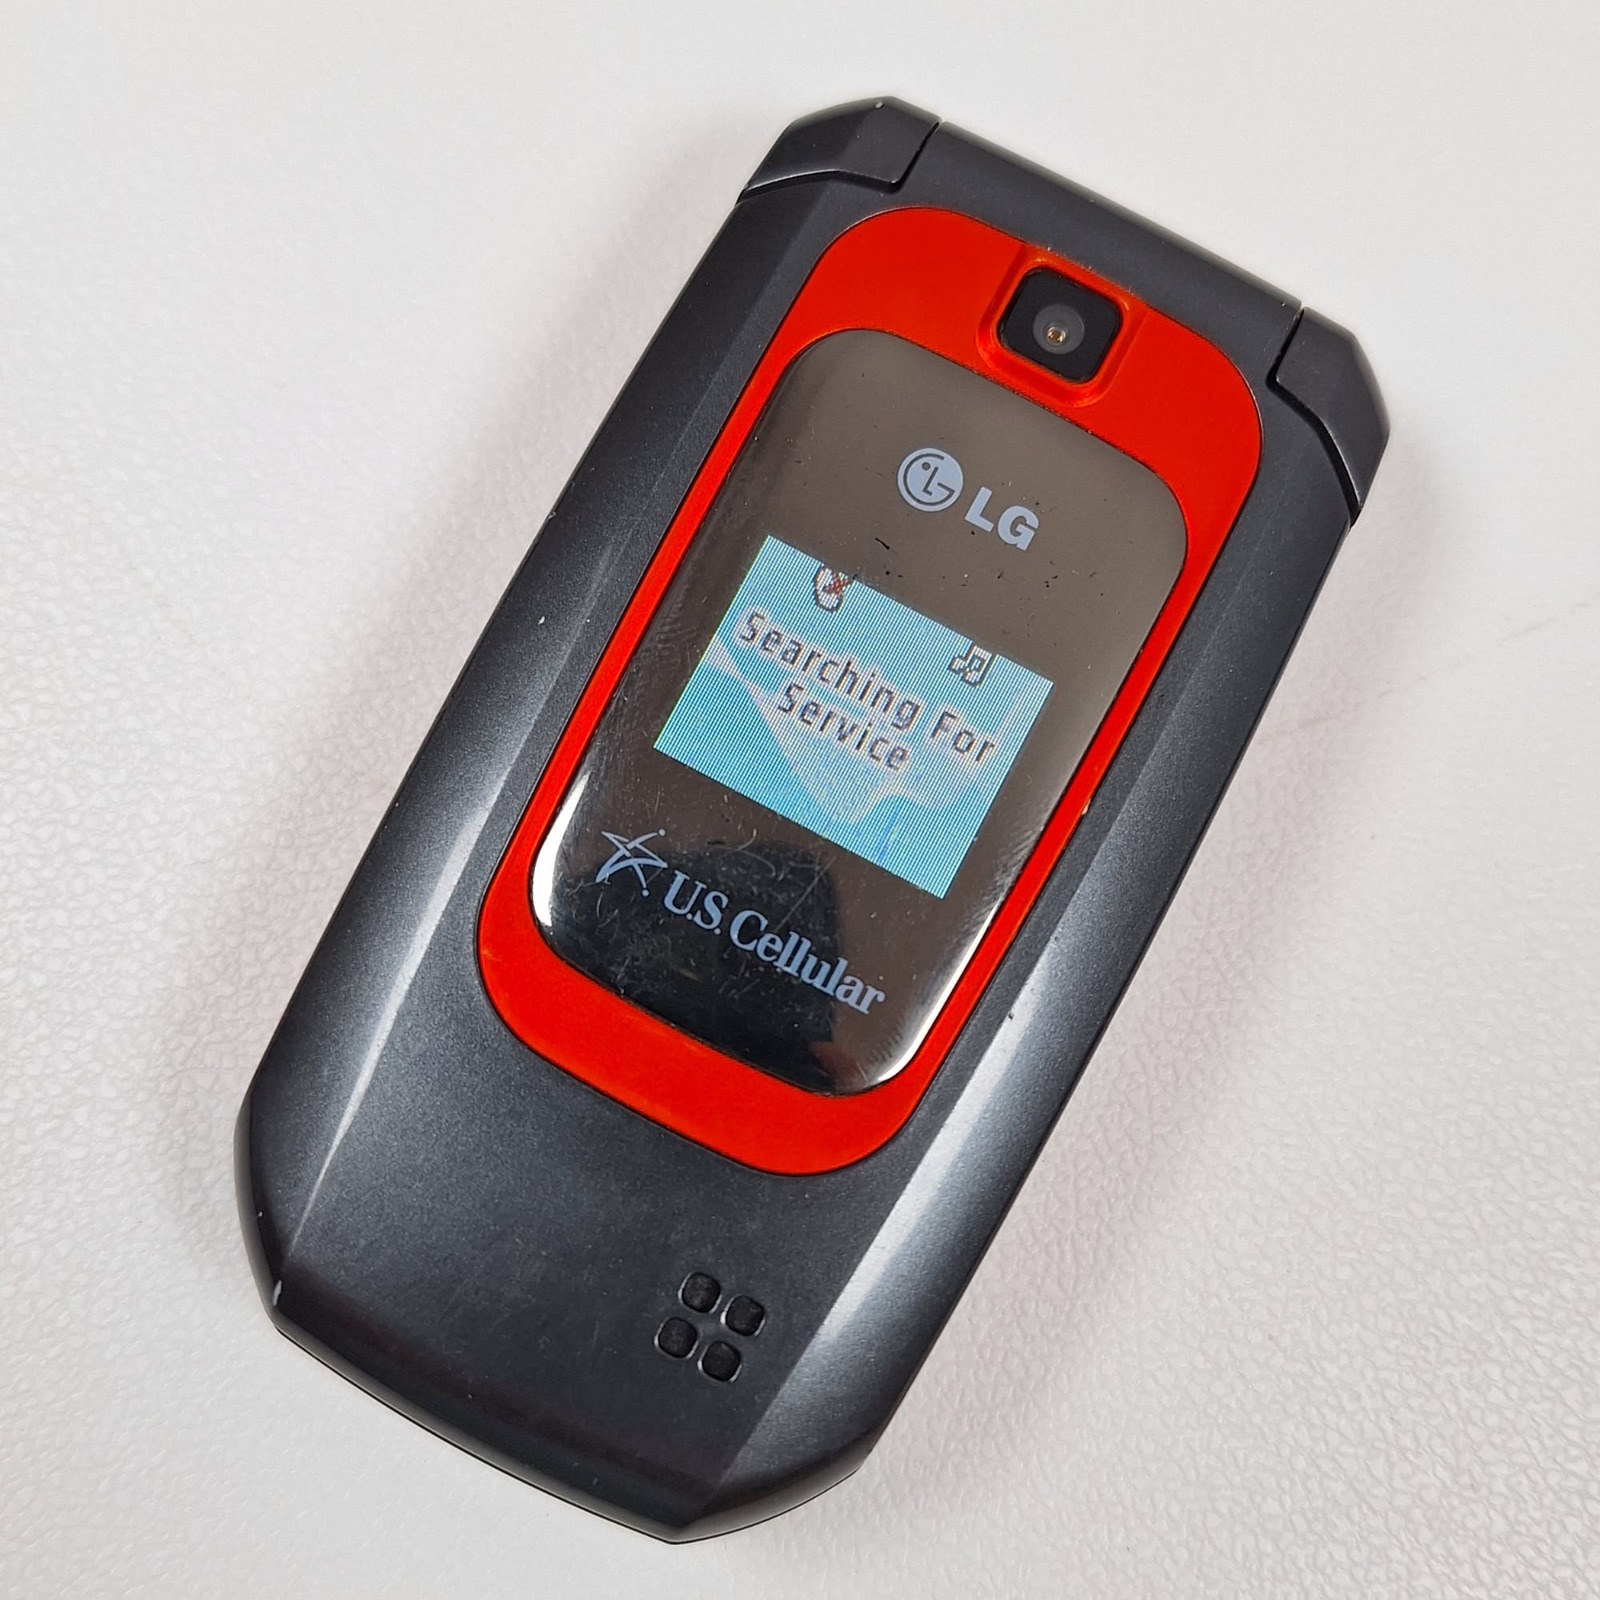 Primary image for LG Helix VX310 Orange/Gray Flip Phone (US Cellular)